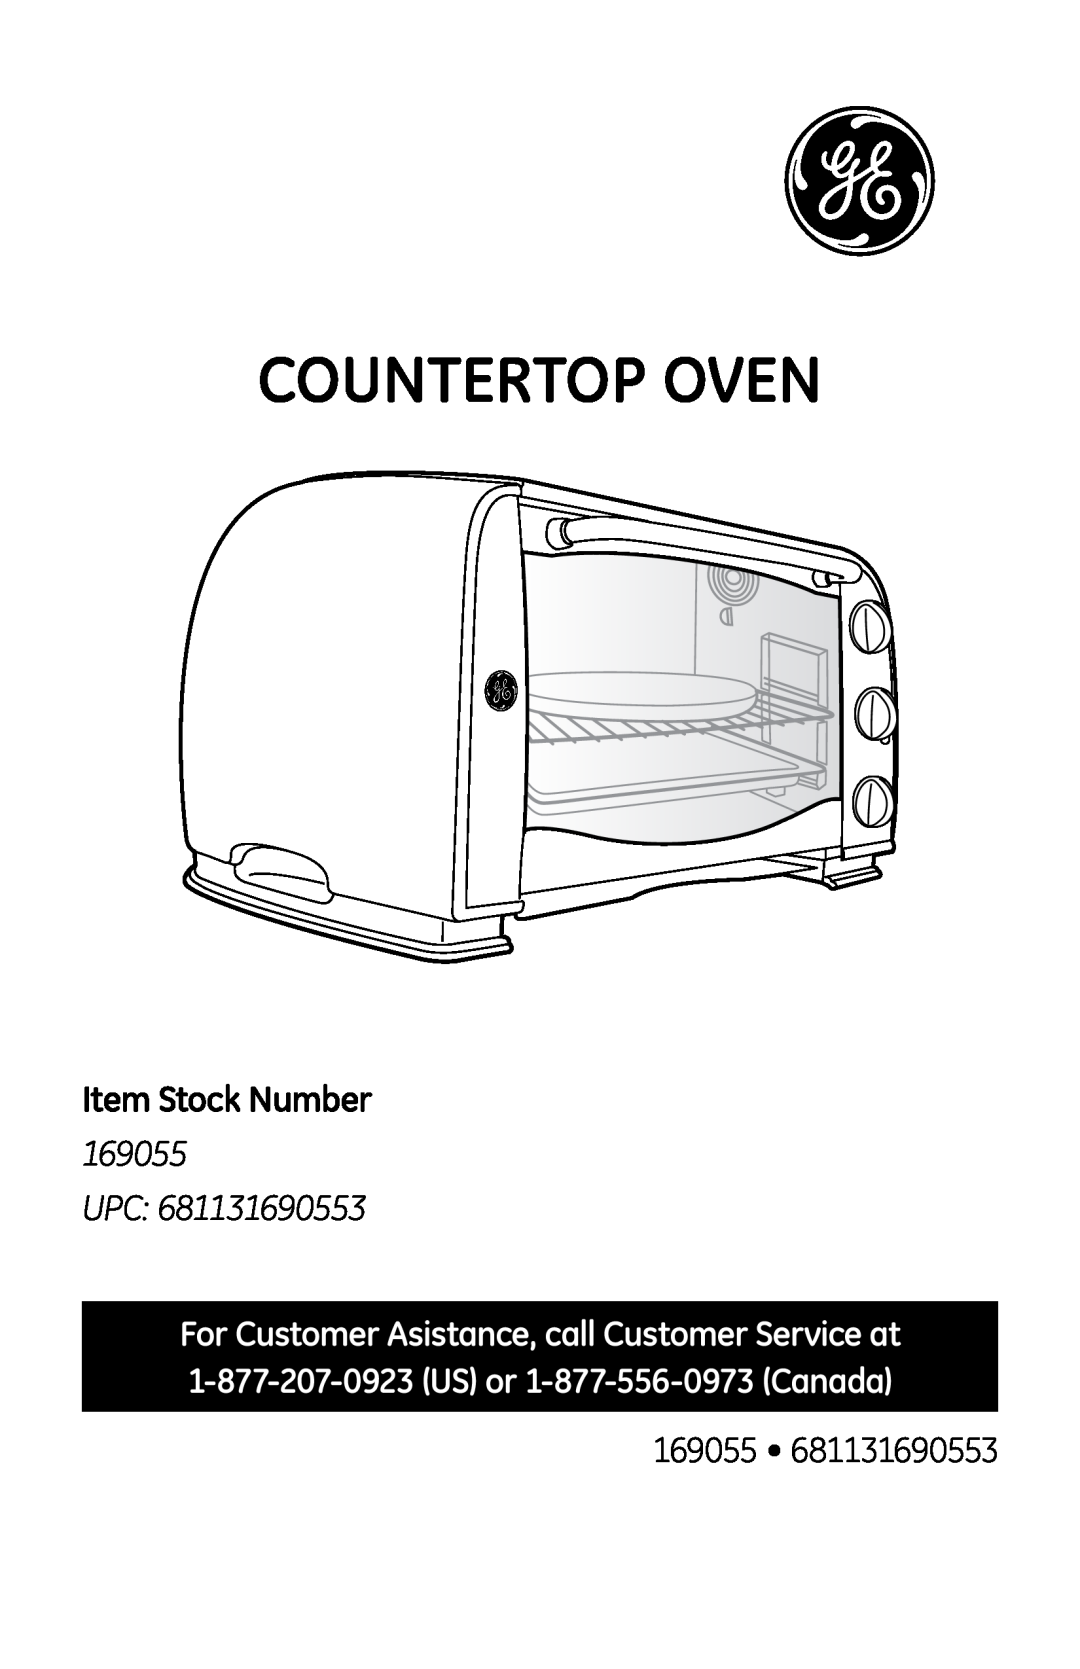 GE Countertop Oven manual Item Stock Number, 169055 UPC 